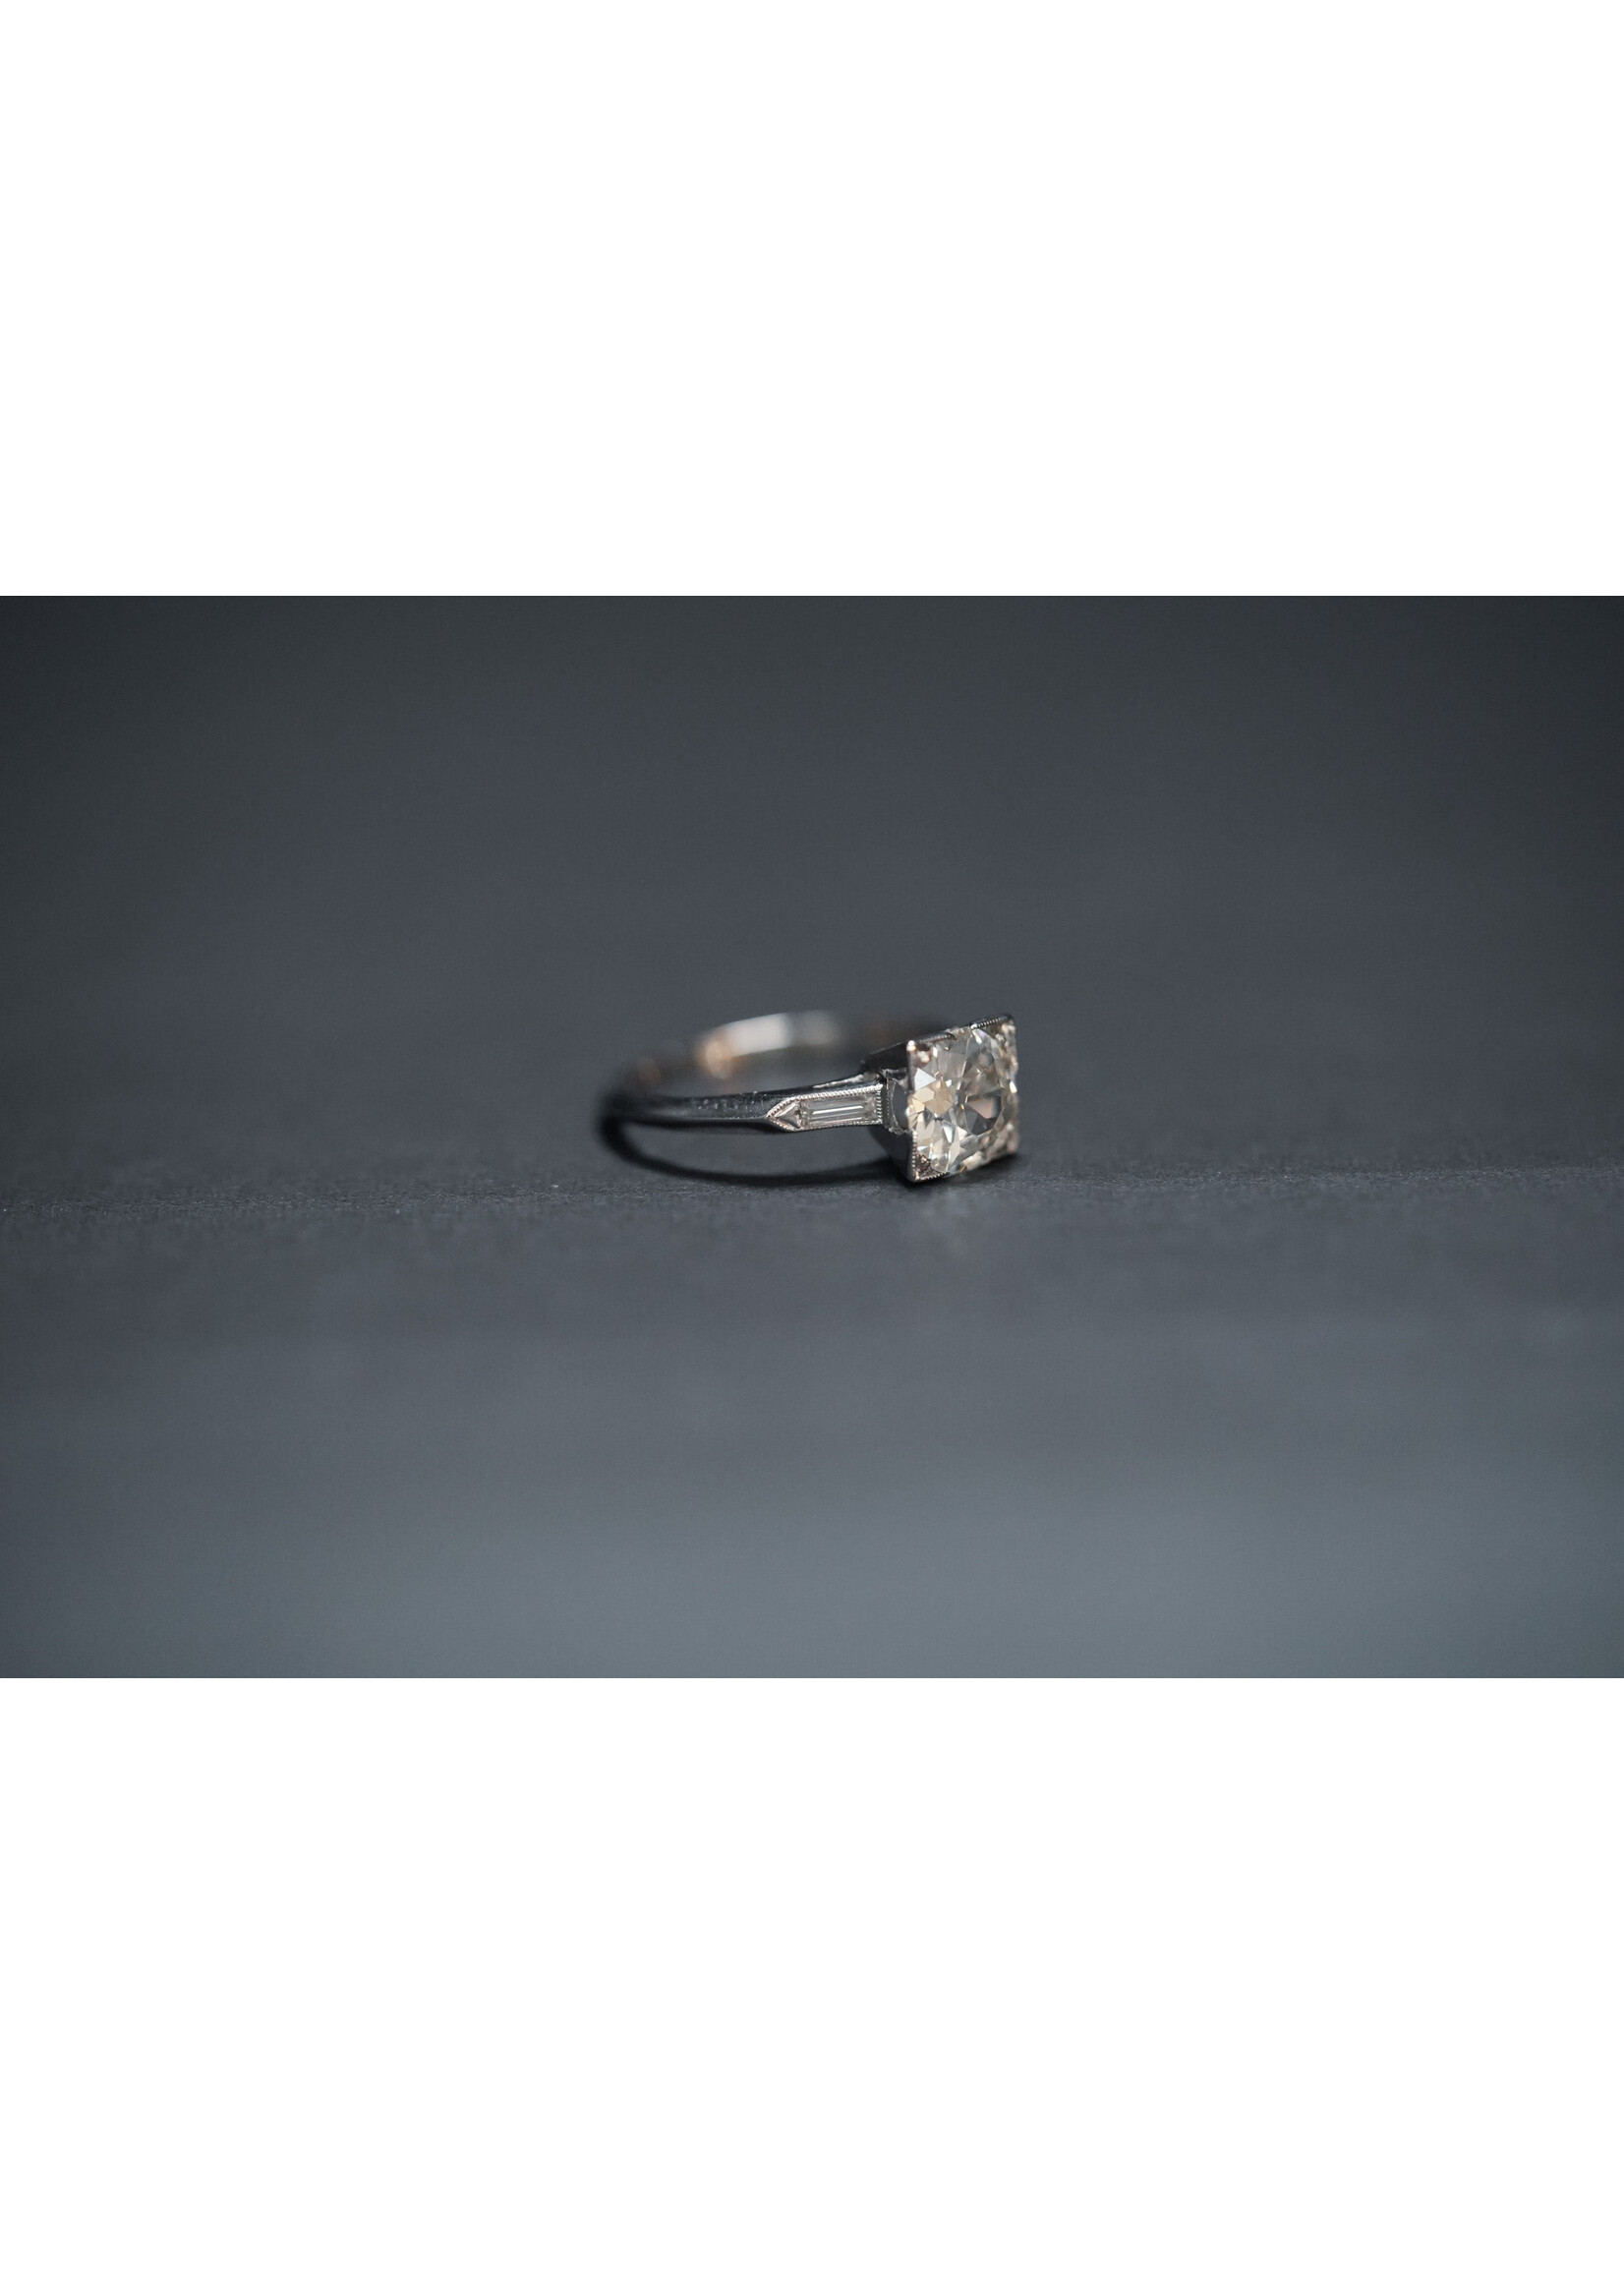 Platinum 3.57g 1.40ctw (1.24ctr) I/SI1 Old European Diamond Engagement Ring (size 6)